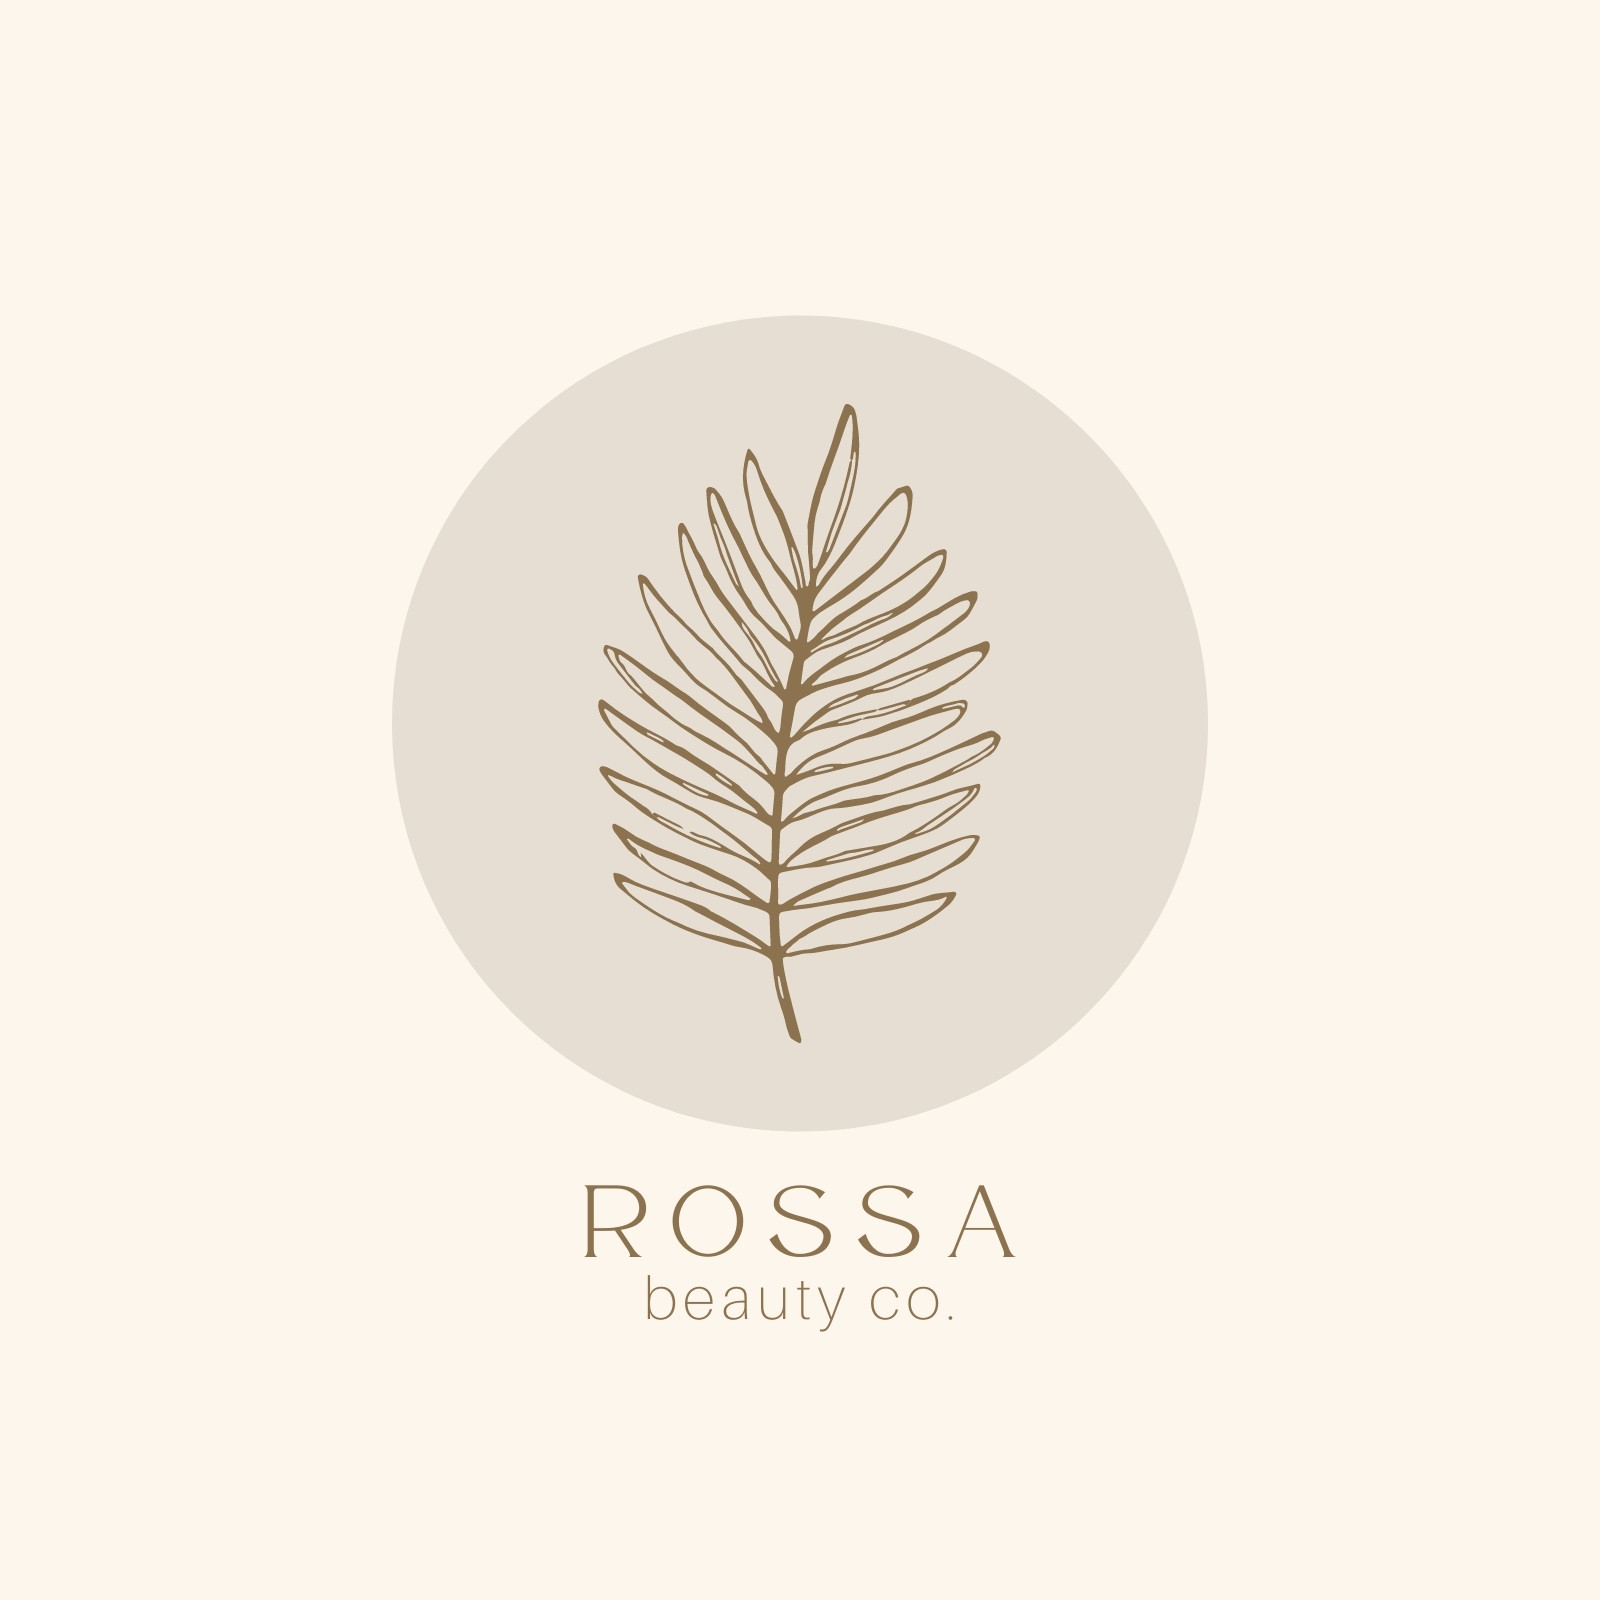 Customize 885+ Flower Shop Logo Templates Online - Canva